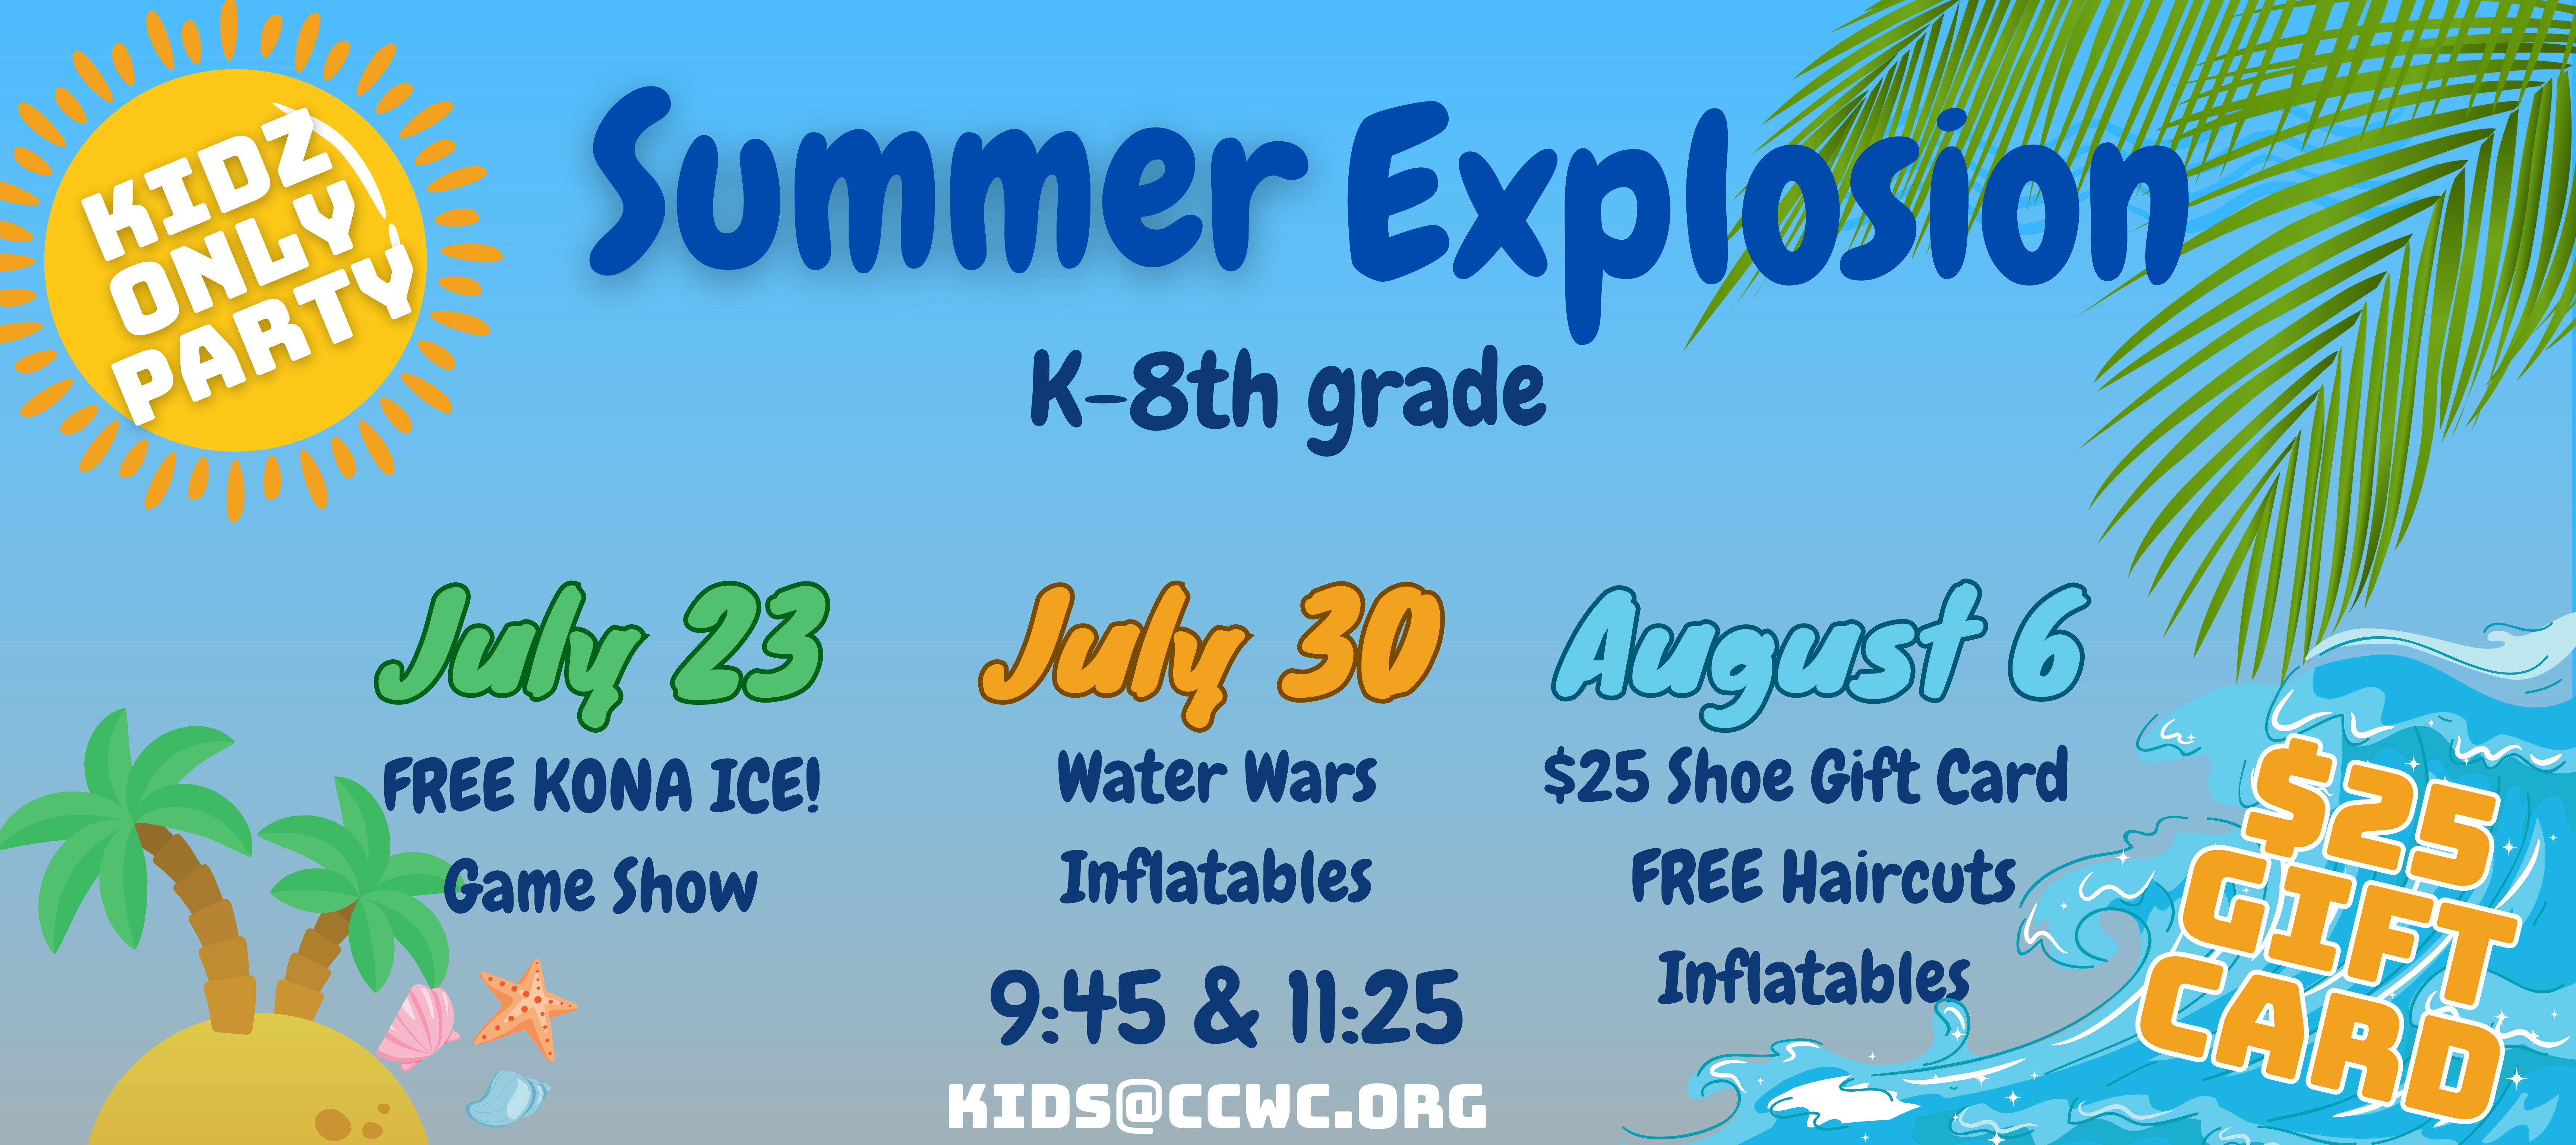 Kids Summer Explosion